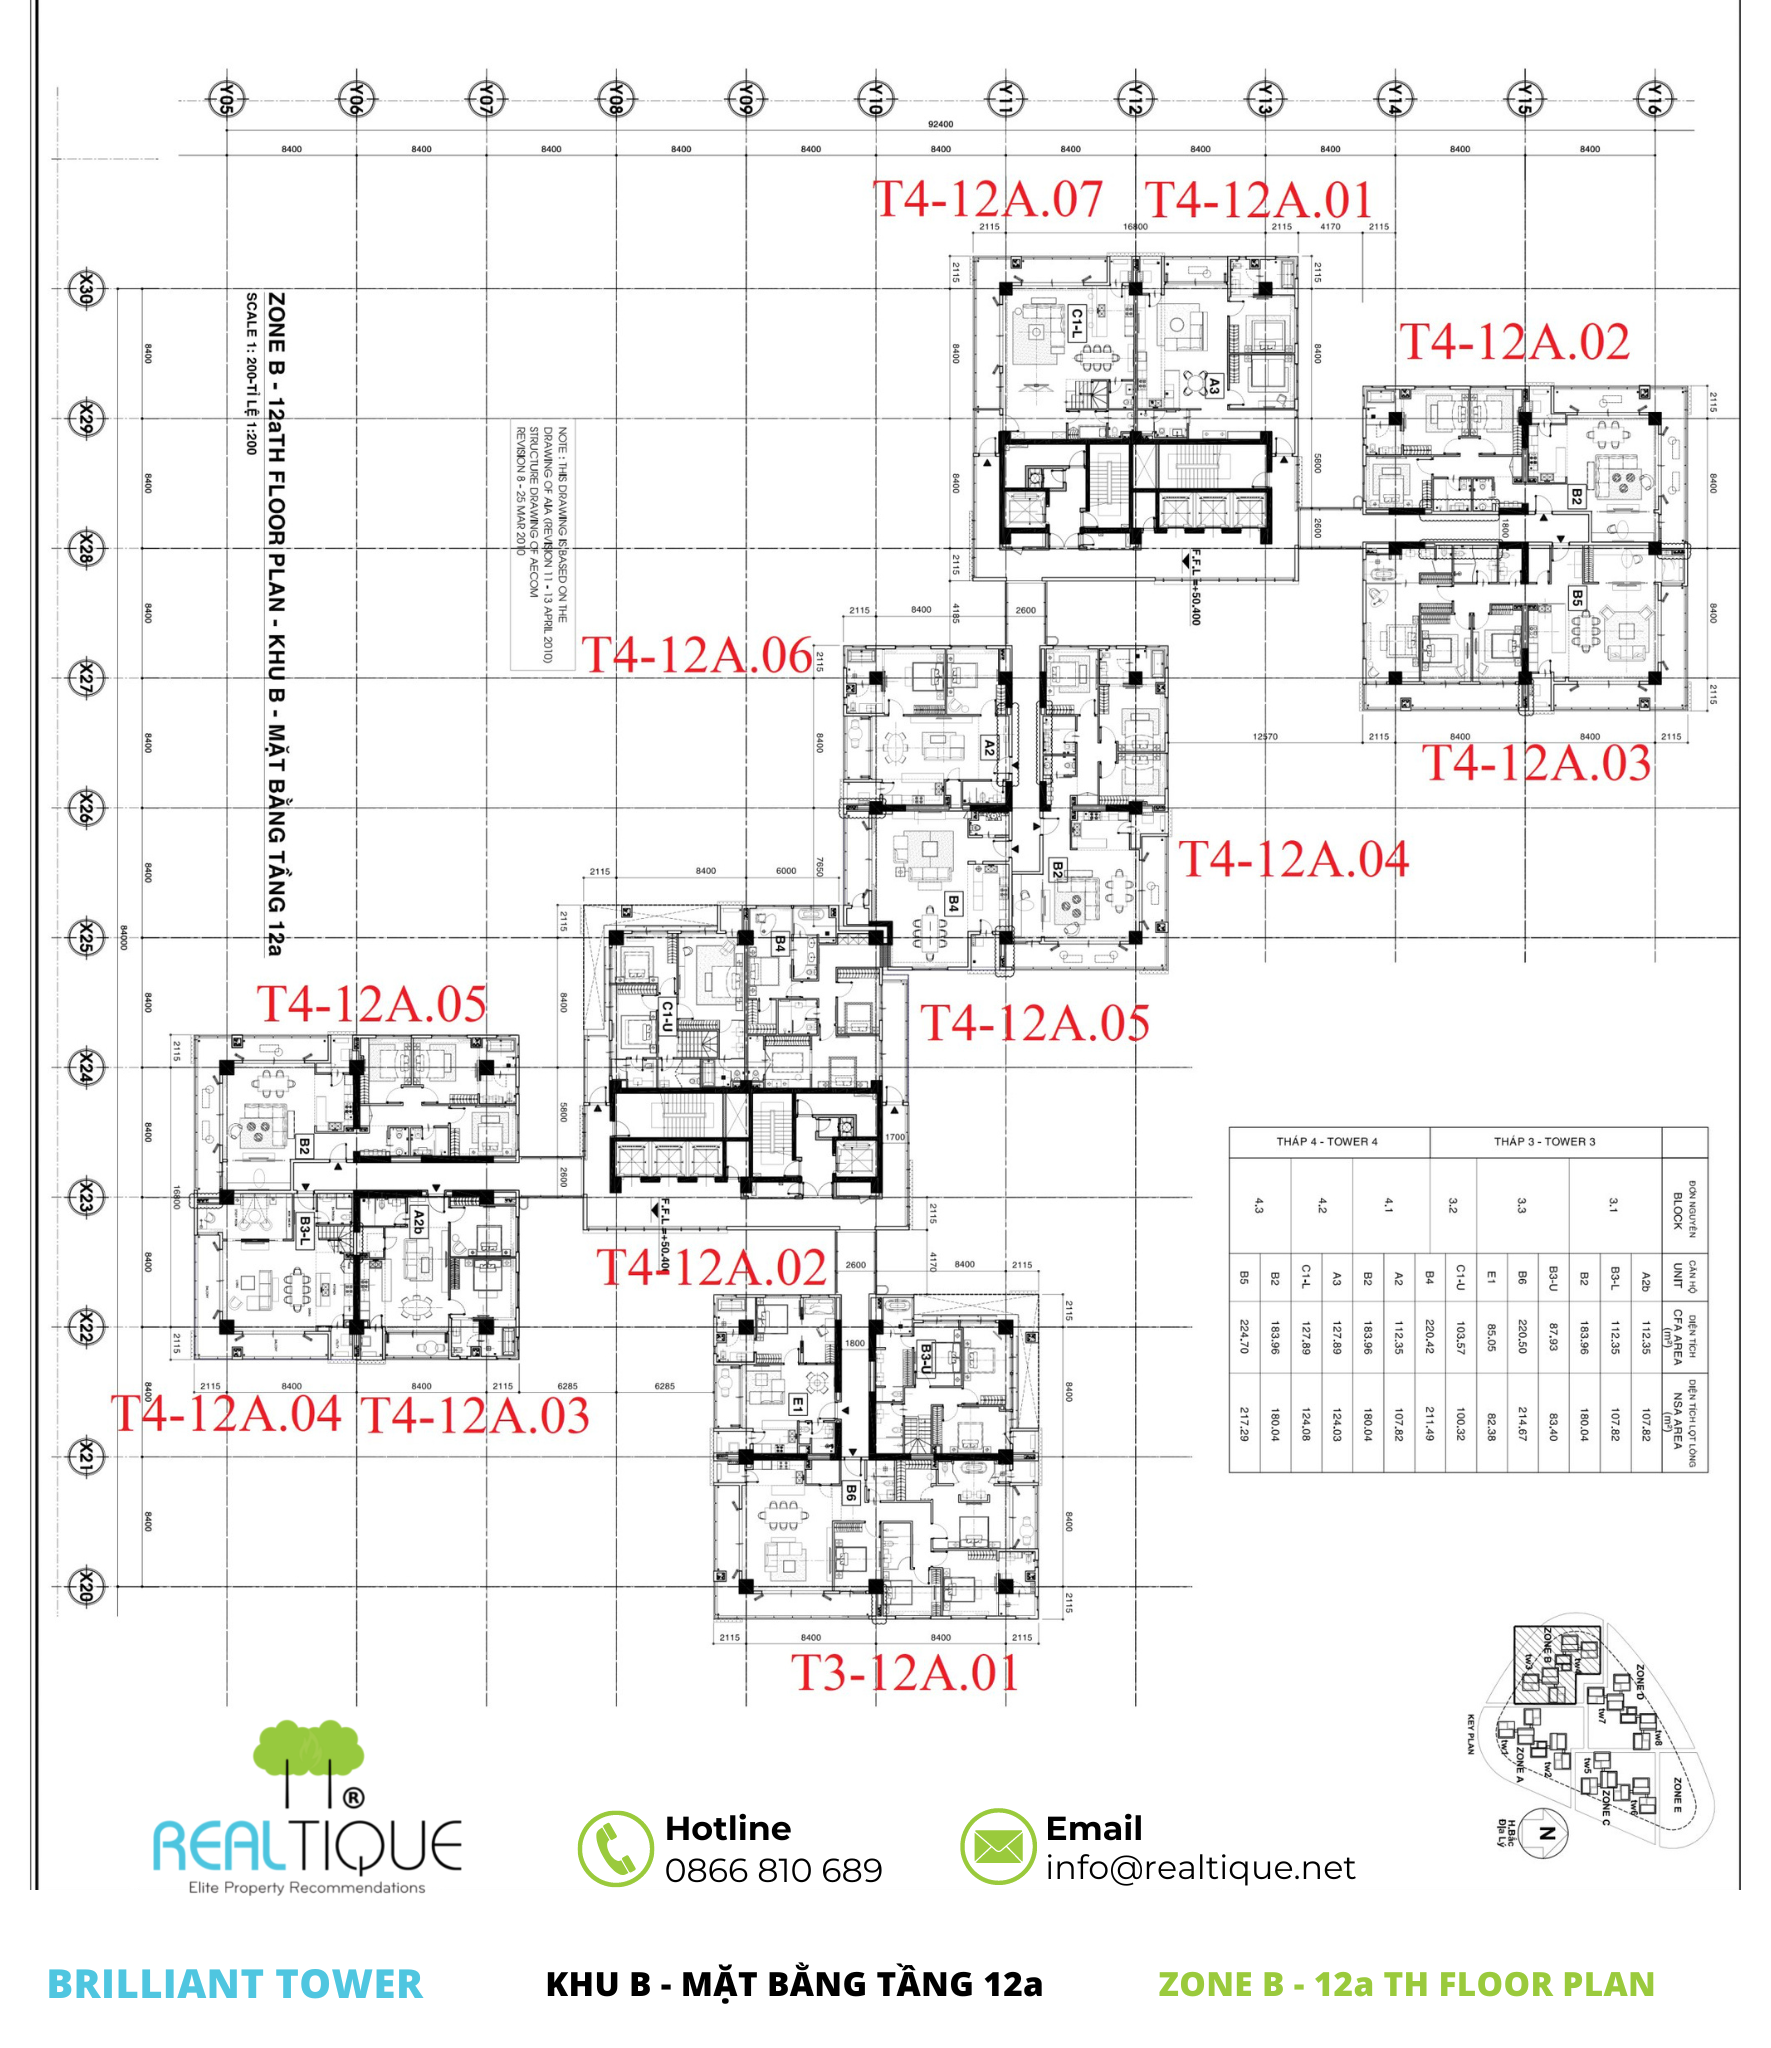 12Ath Floor plan of Brilliant Tower, Diamond Island